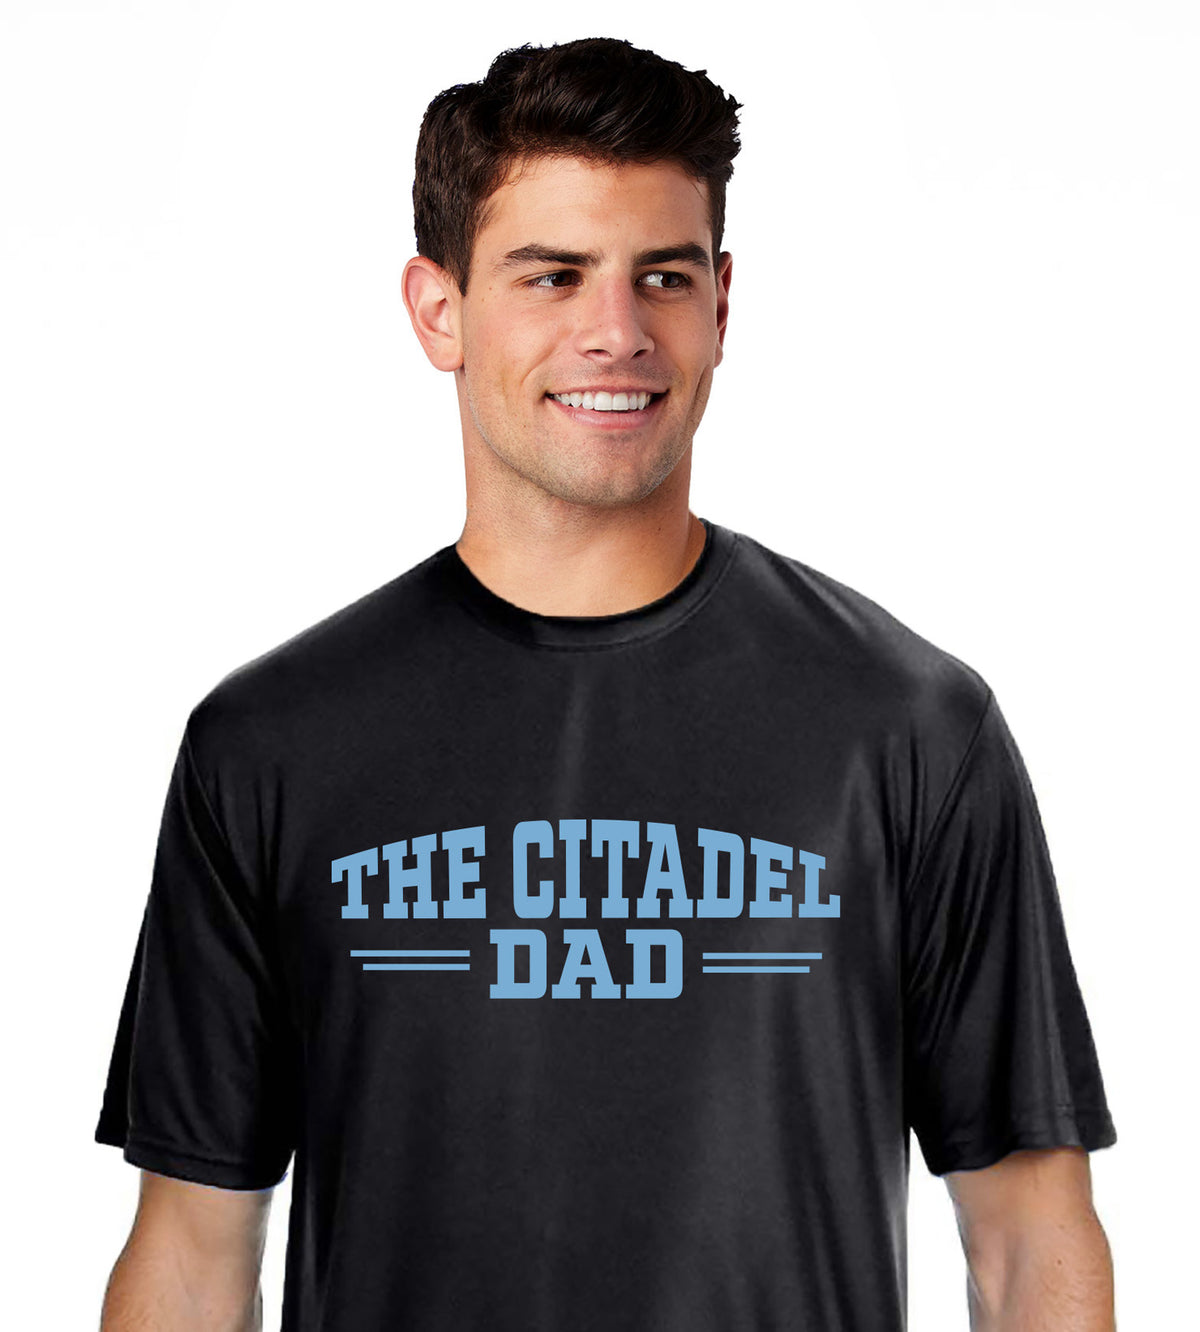 The Citadel Dad Performance Tee